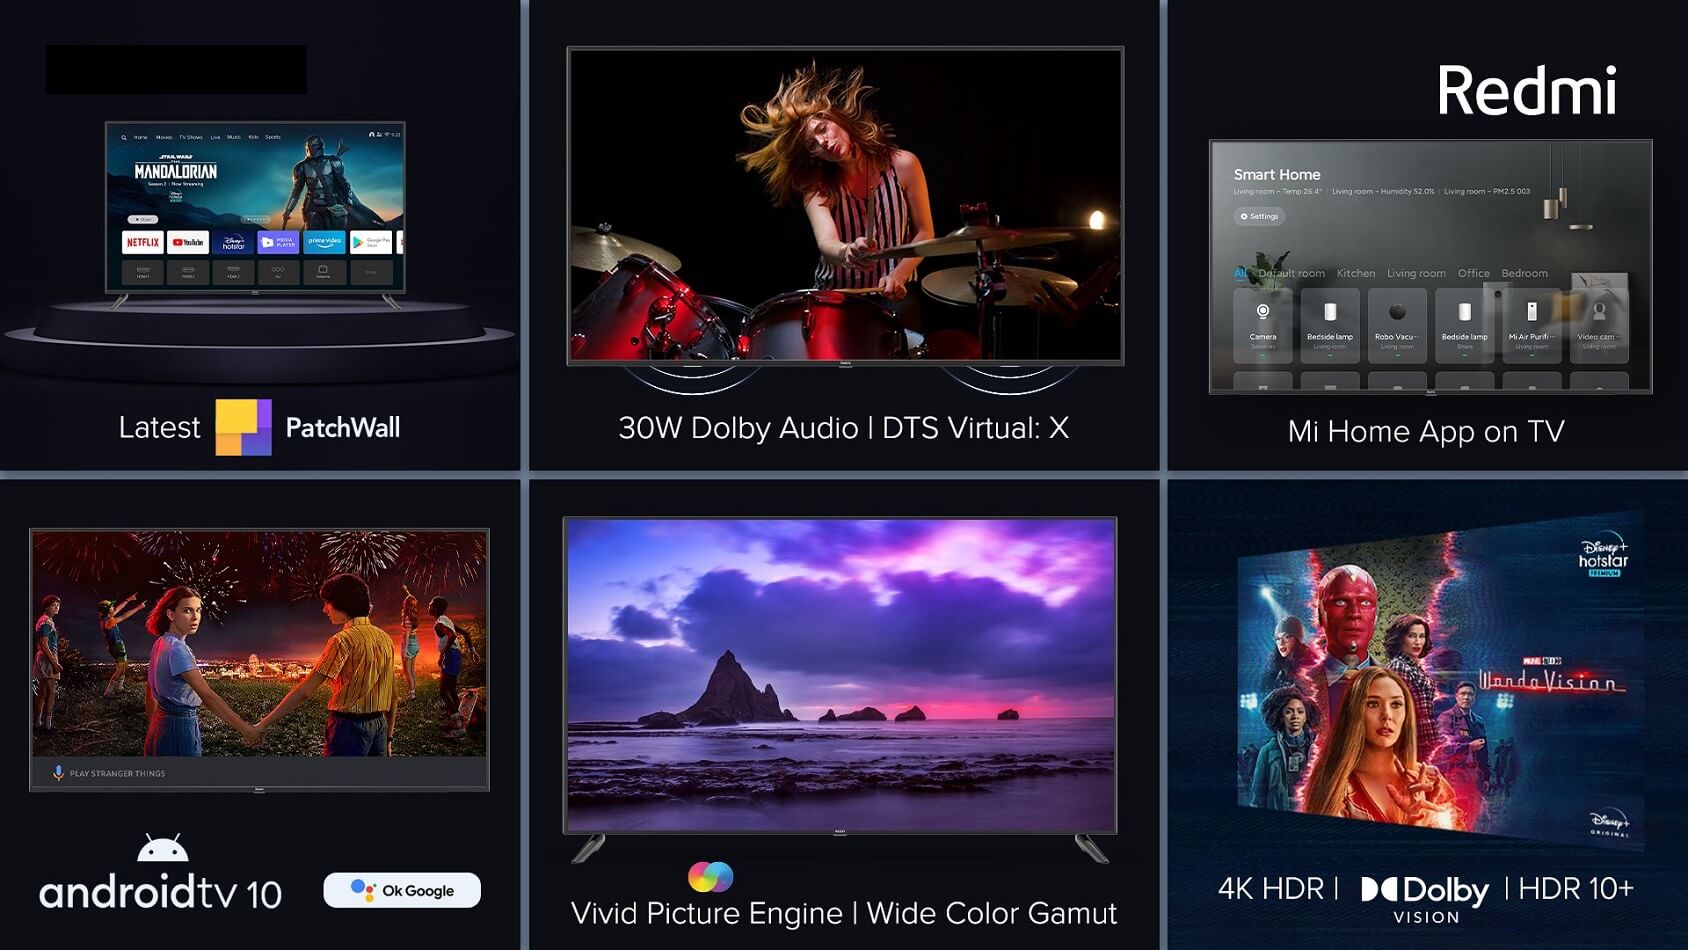 Redmi Smart TV X50 X55 X65 features